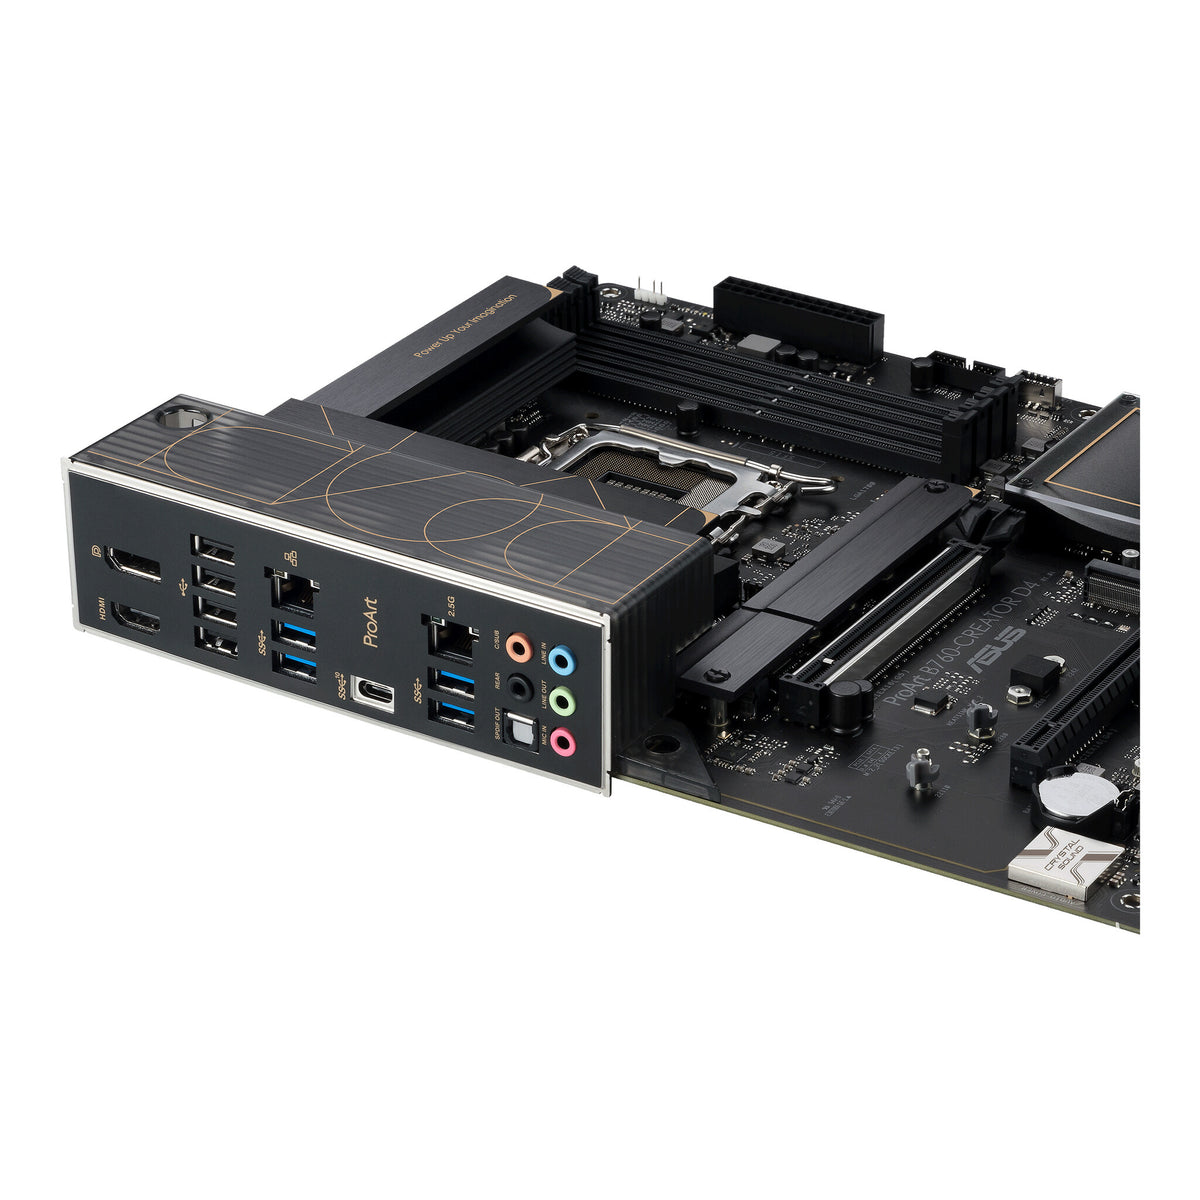 ASUS PROART B760-CREATOR D4 ATX motherboard - Intel B760 LGA 1700